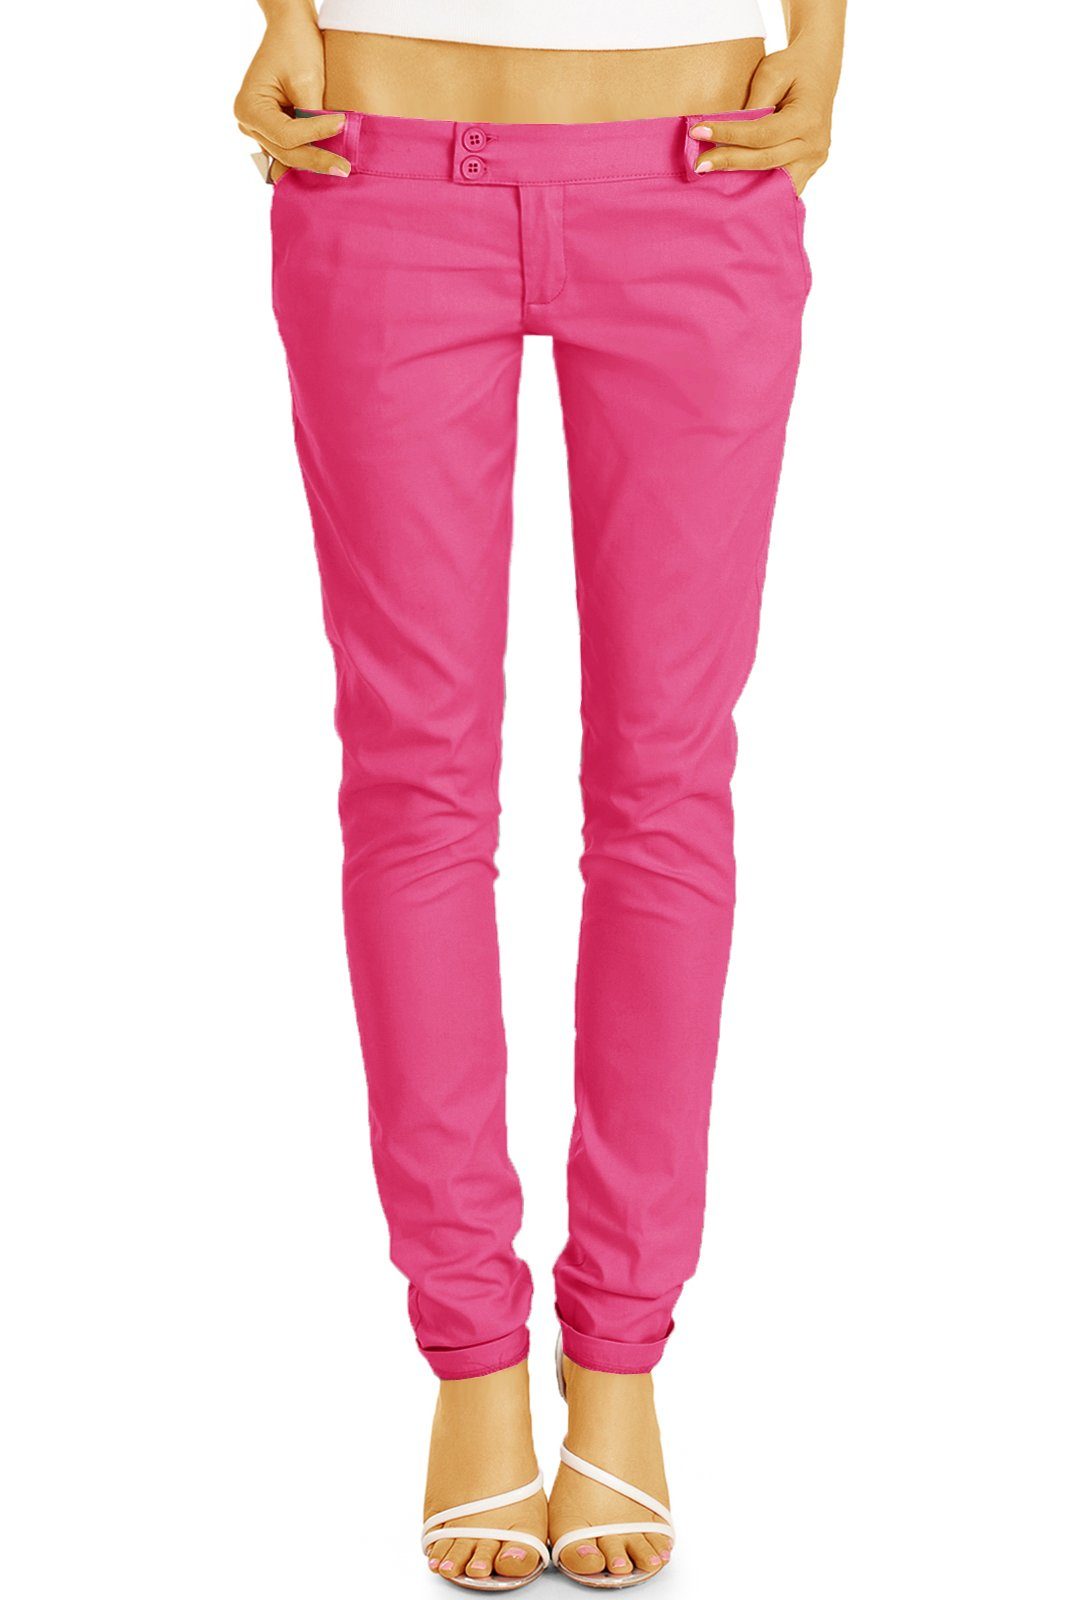 be fit h15a sportlich slim / Hüfthosen Stoffhose styled Damenhosen, elegant röhrige pink